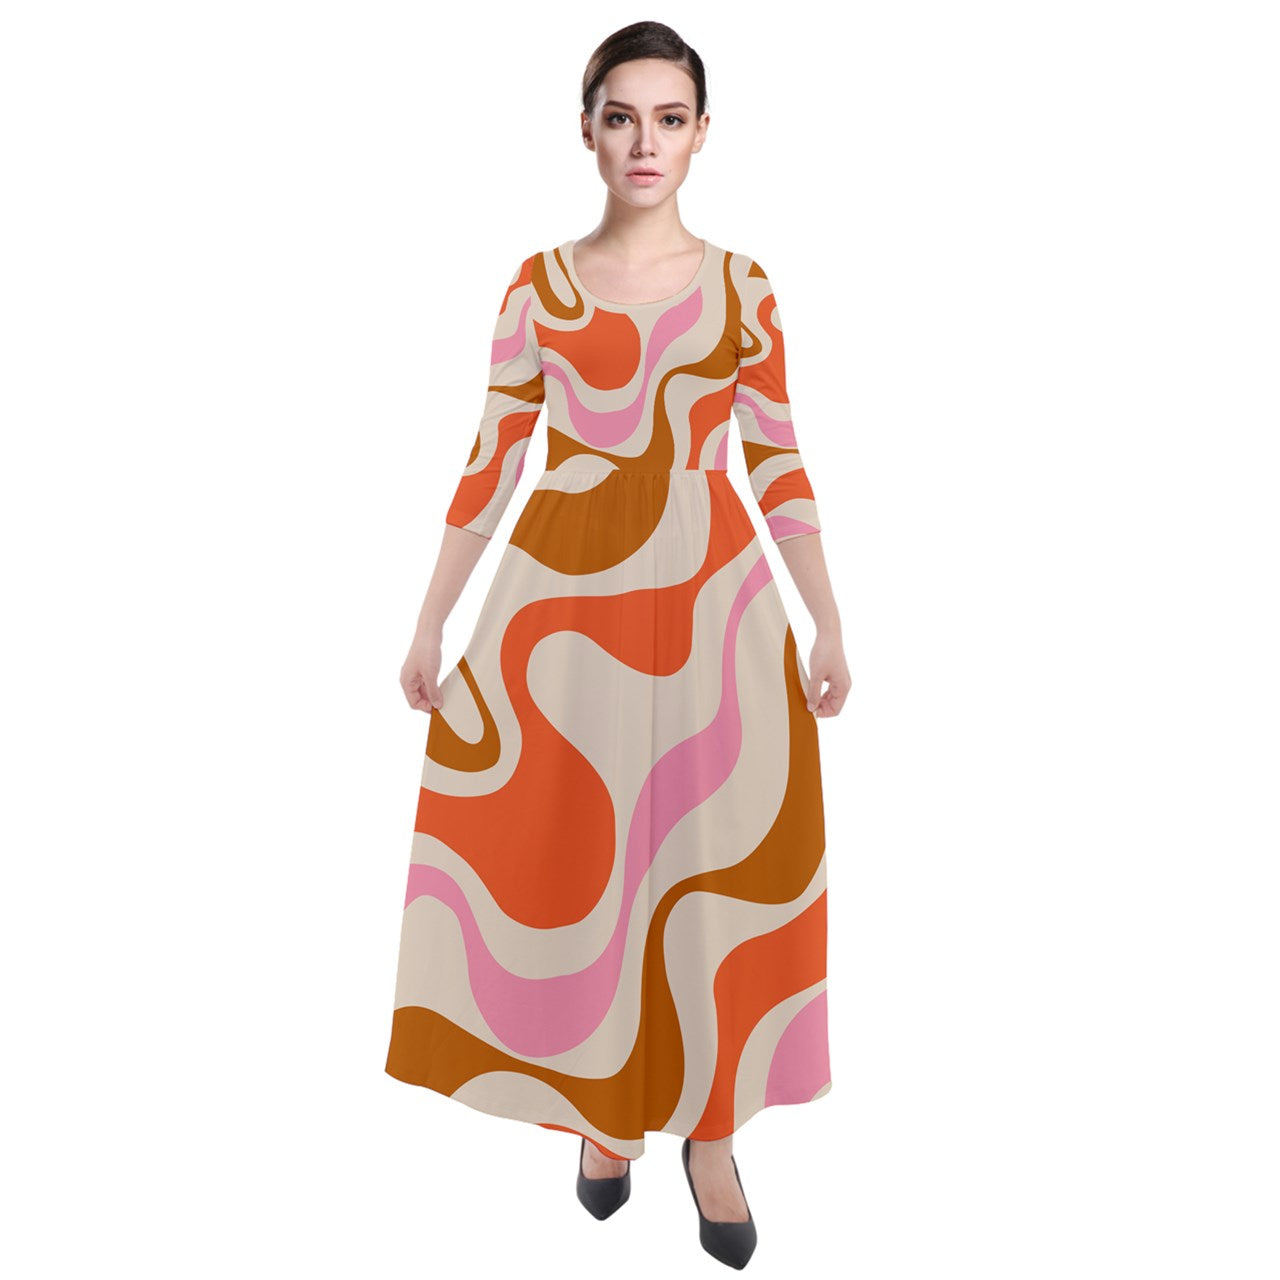 Maxi Dress, Orange Stripe Boho Maxi Dress, 70s Dress Style, Abstract Stripe Maxi Dress, Bohemian Style Dress, Hippie Dress, Hippie Style